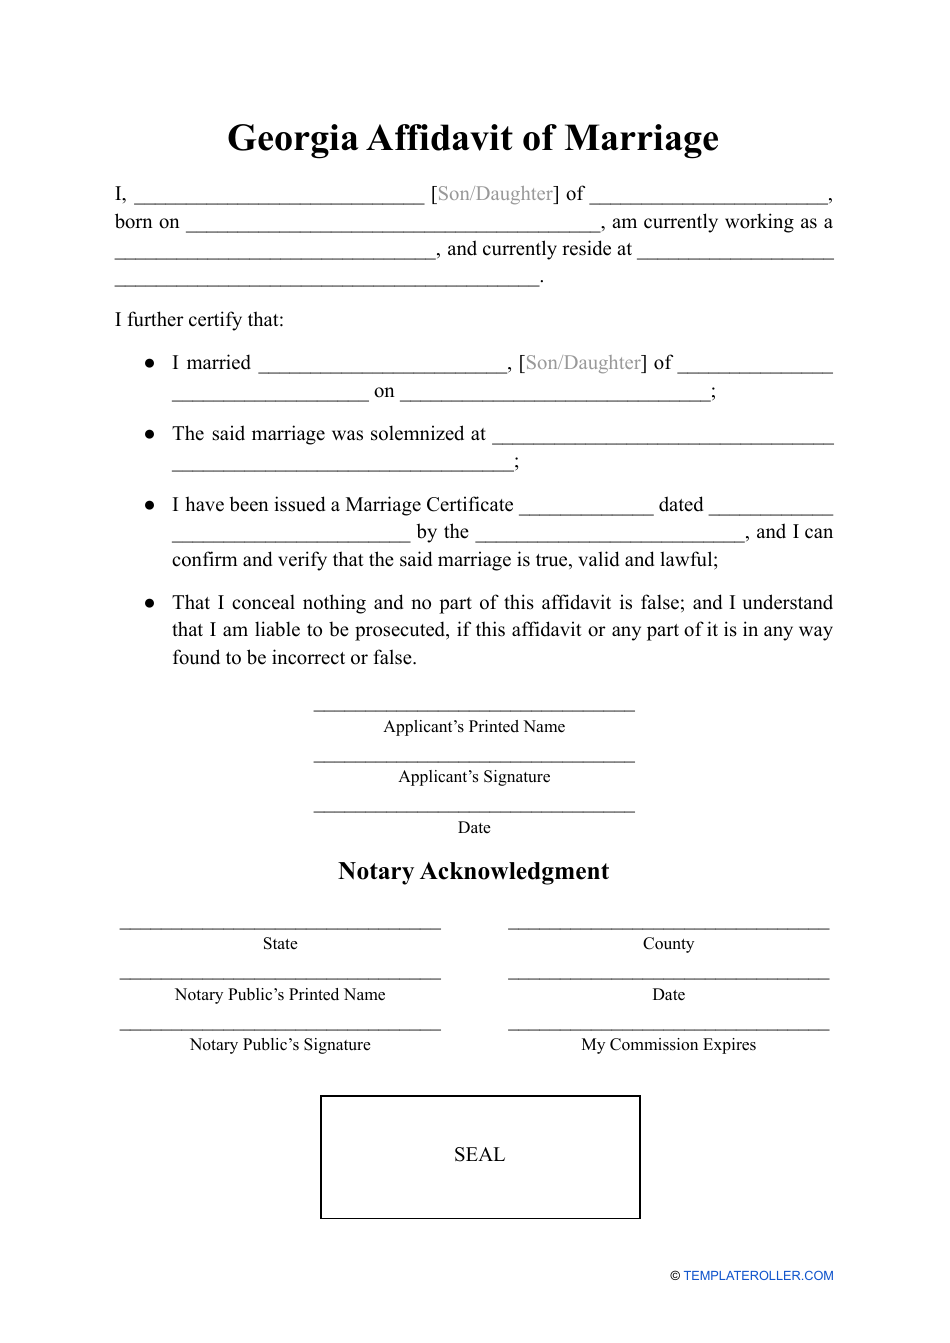 Affidavit of Marriage - Georgia (United States), Page 1